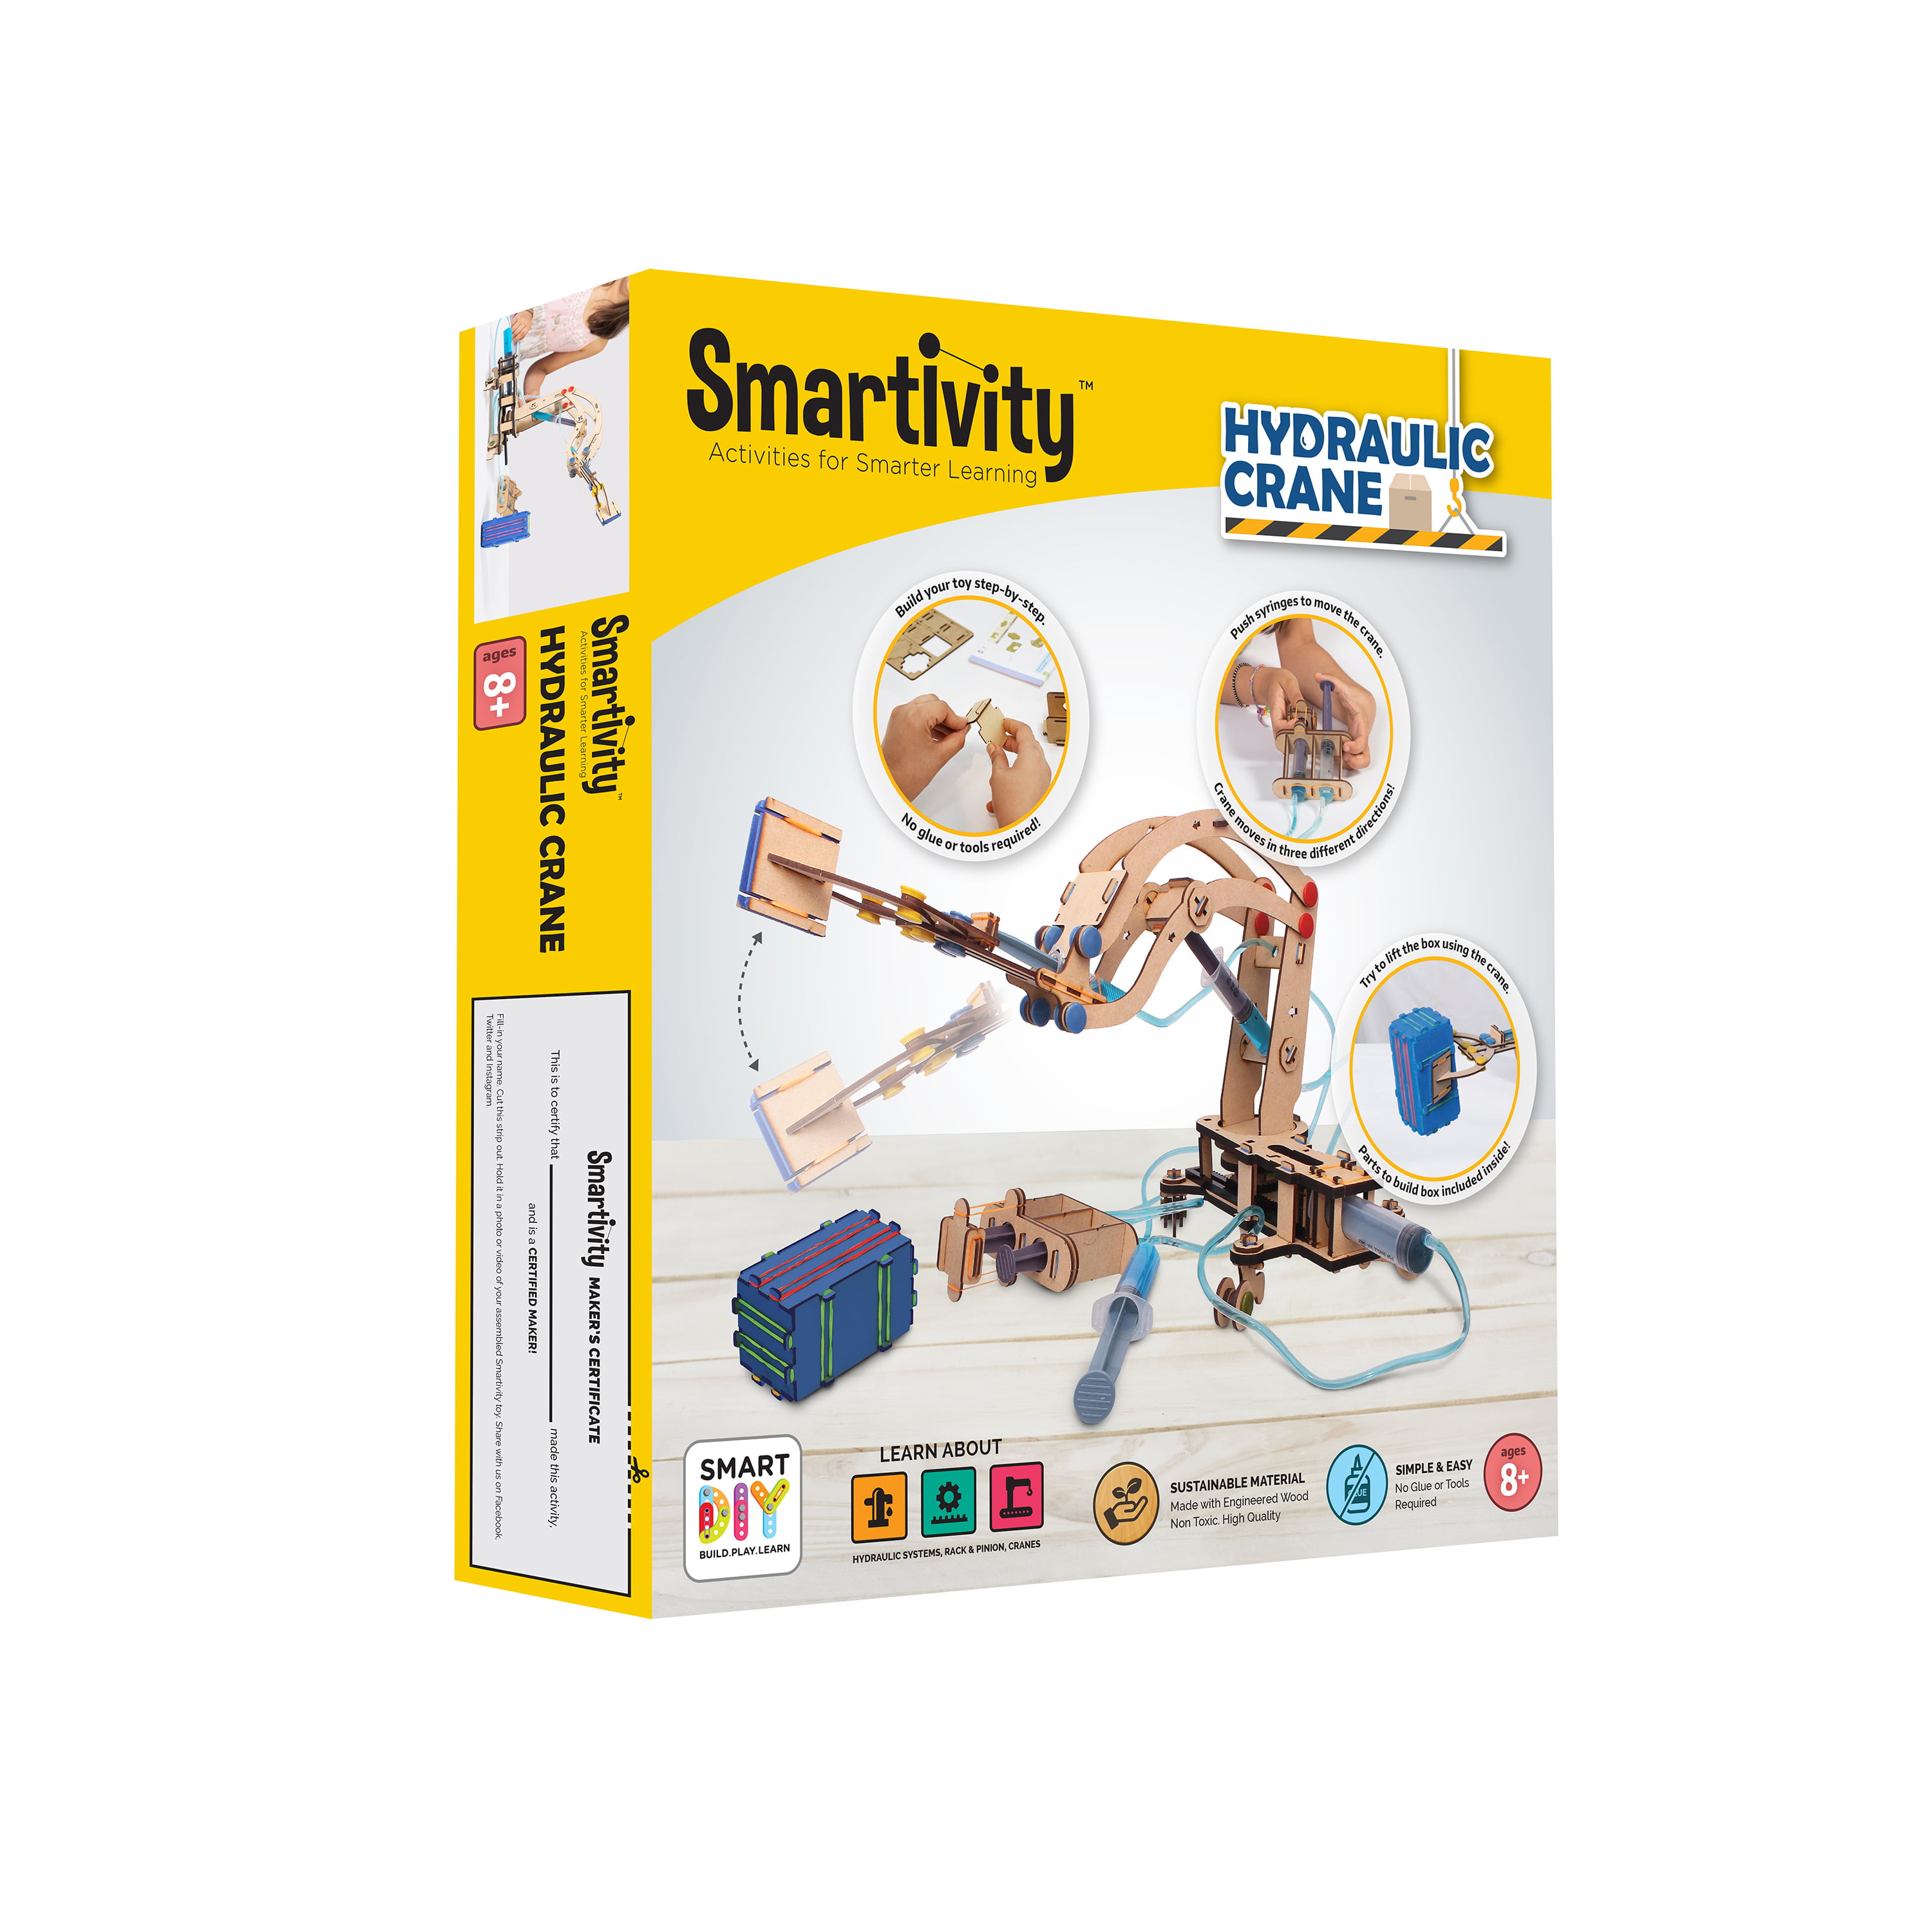 perfect gift for creative kids & future engineer Electric Crane Mechanics Kit 